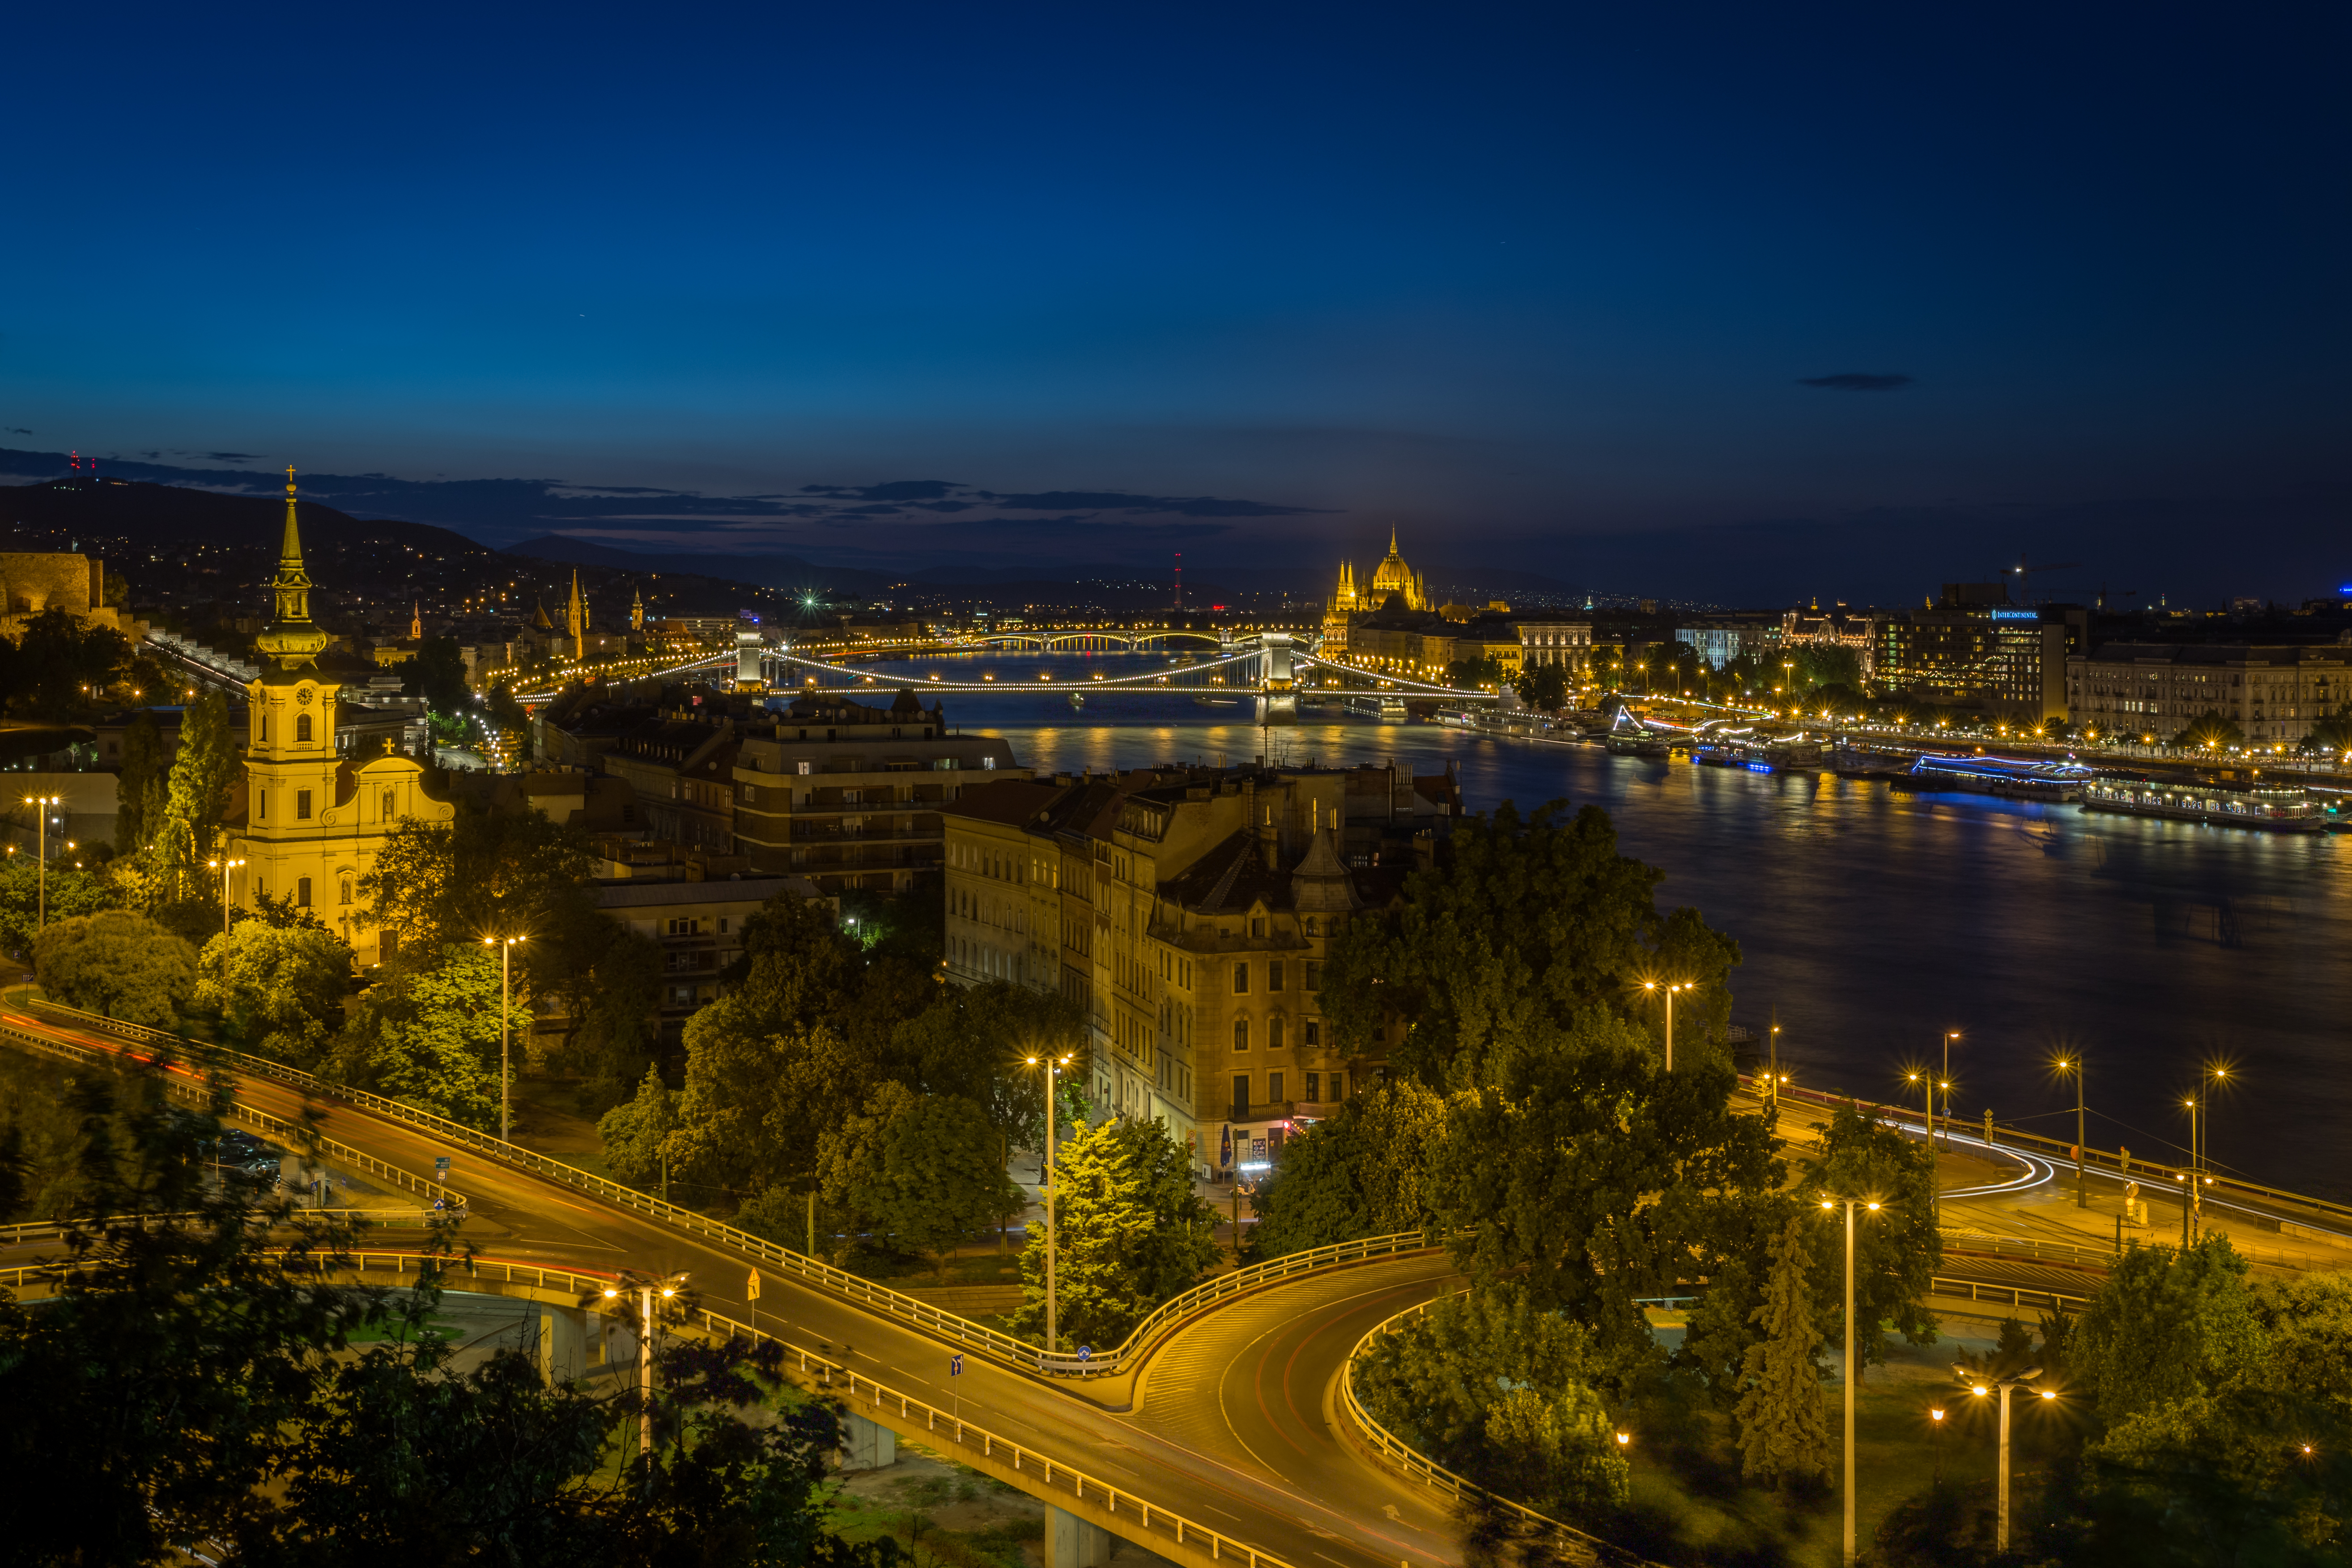 Wallpapers night night city series Budapest on the desktop